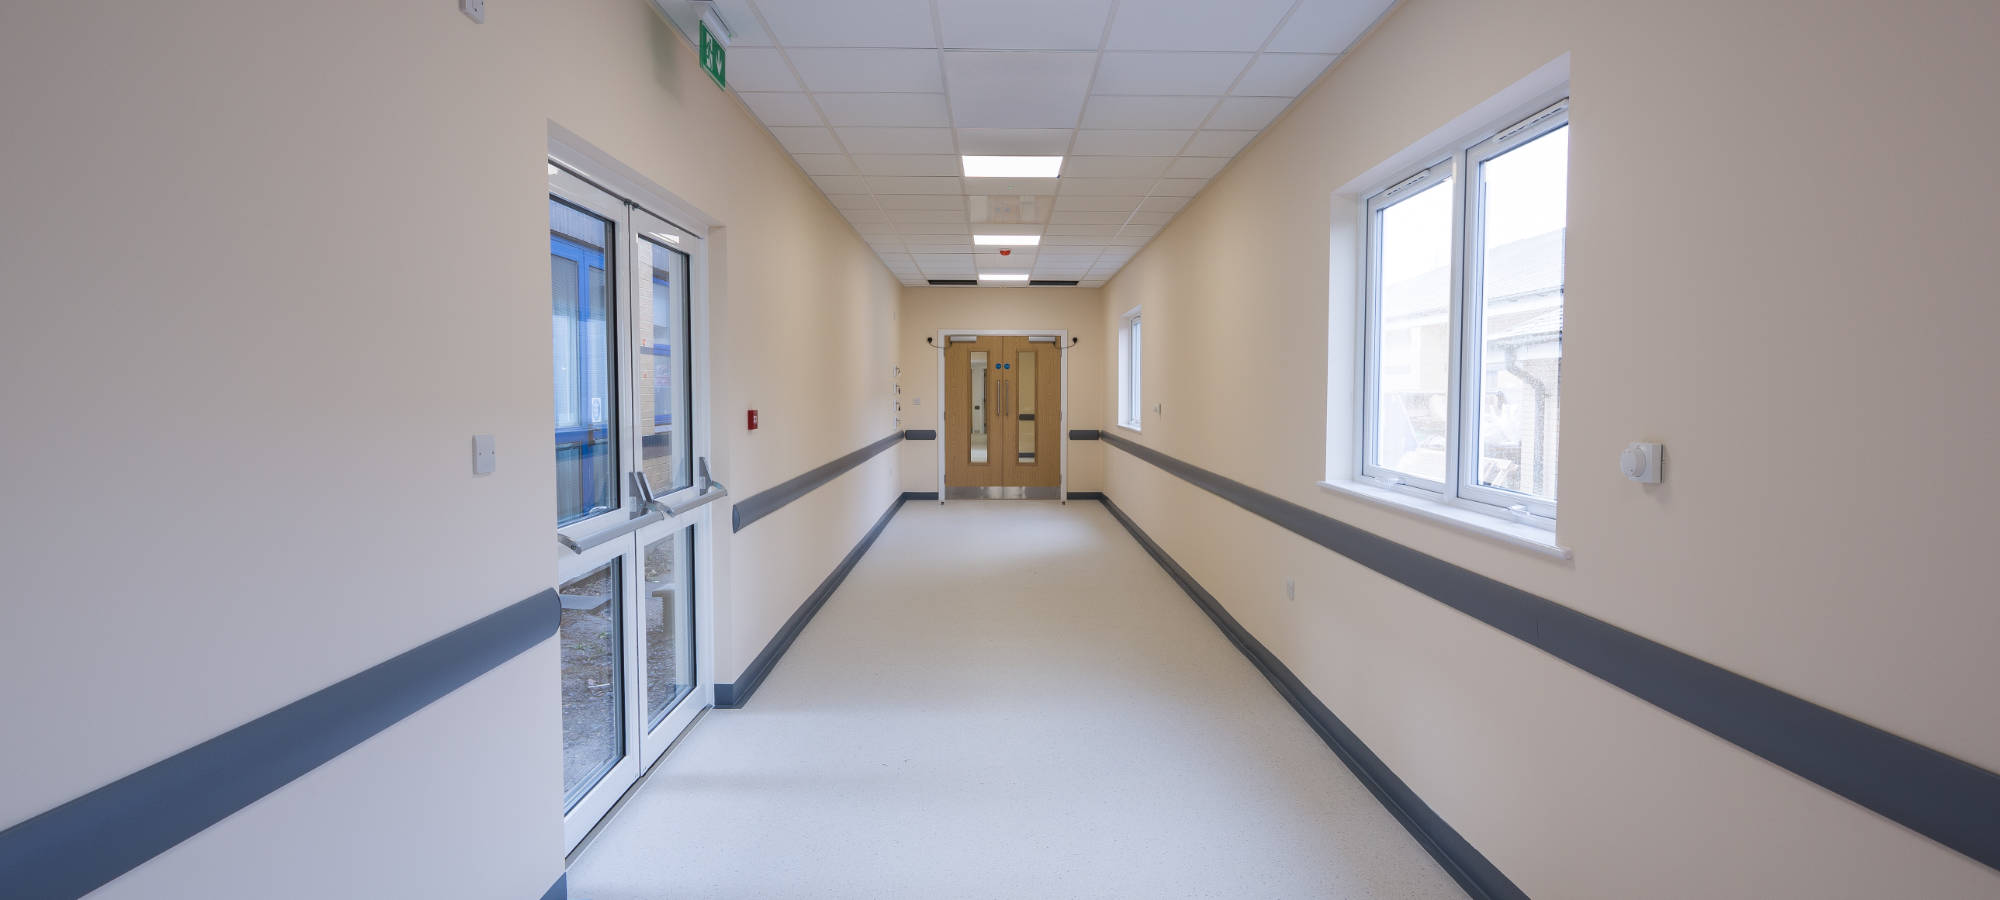 Imaging Matters imaging facility at Frimley Hospital